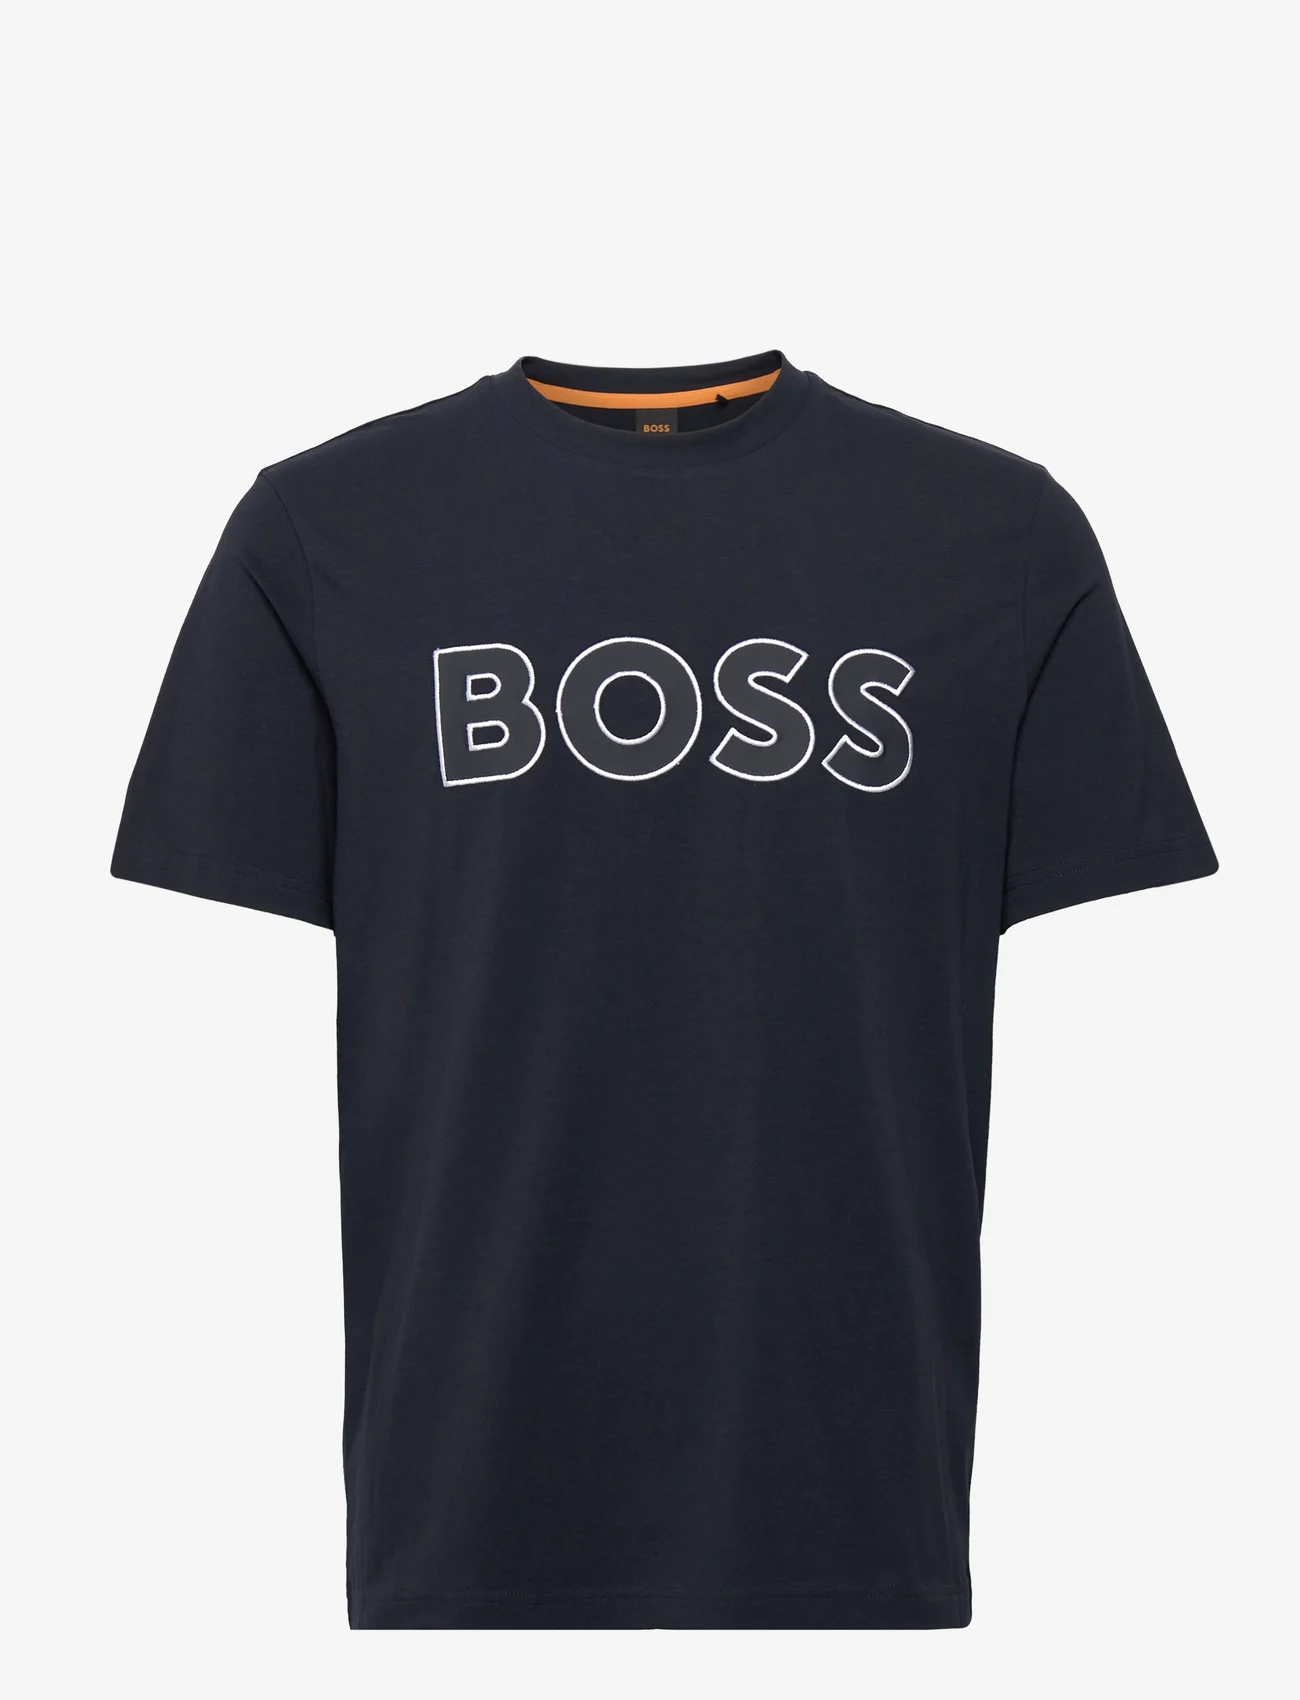 BOSS - Telogox - kortärmade t-shirts - dark blue - 0